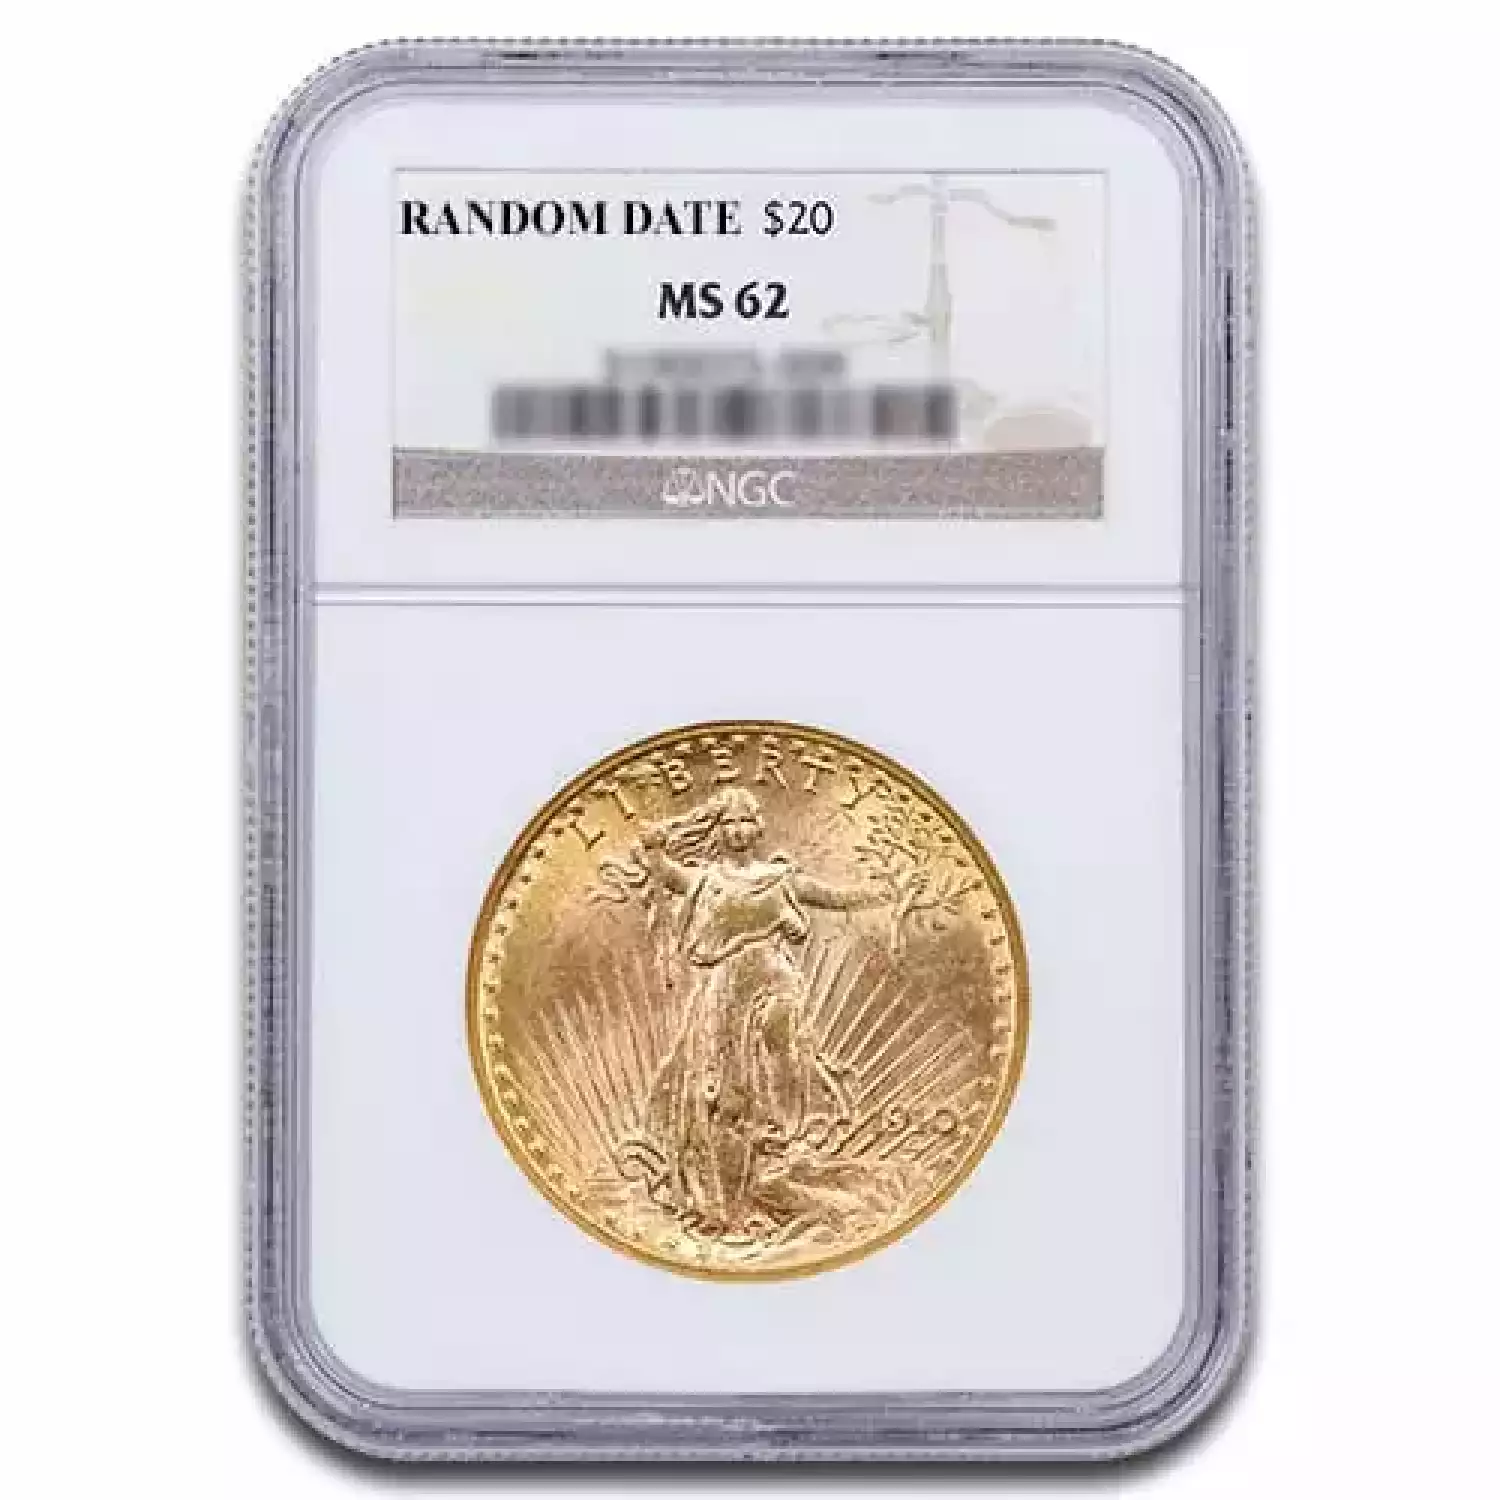 St. Gaudens $20 (1907 – 1933) - NGC - MS62